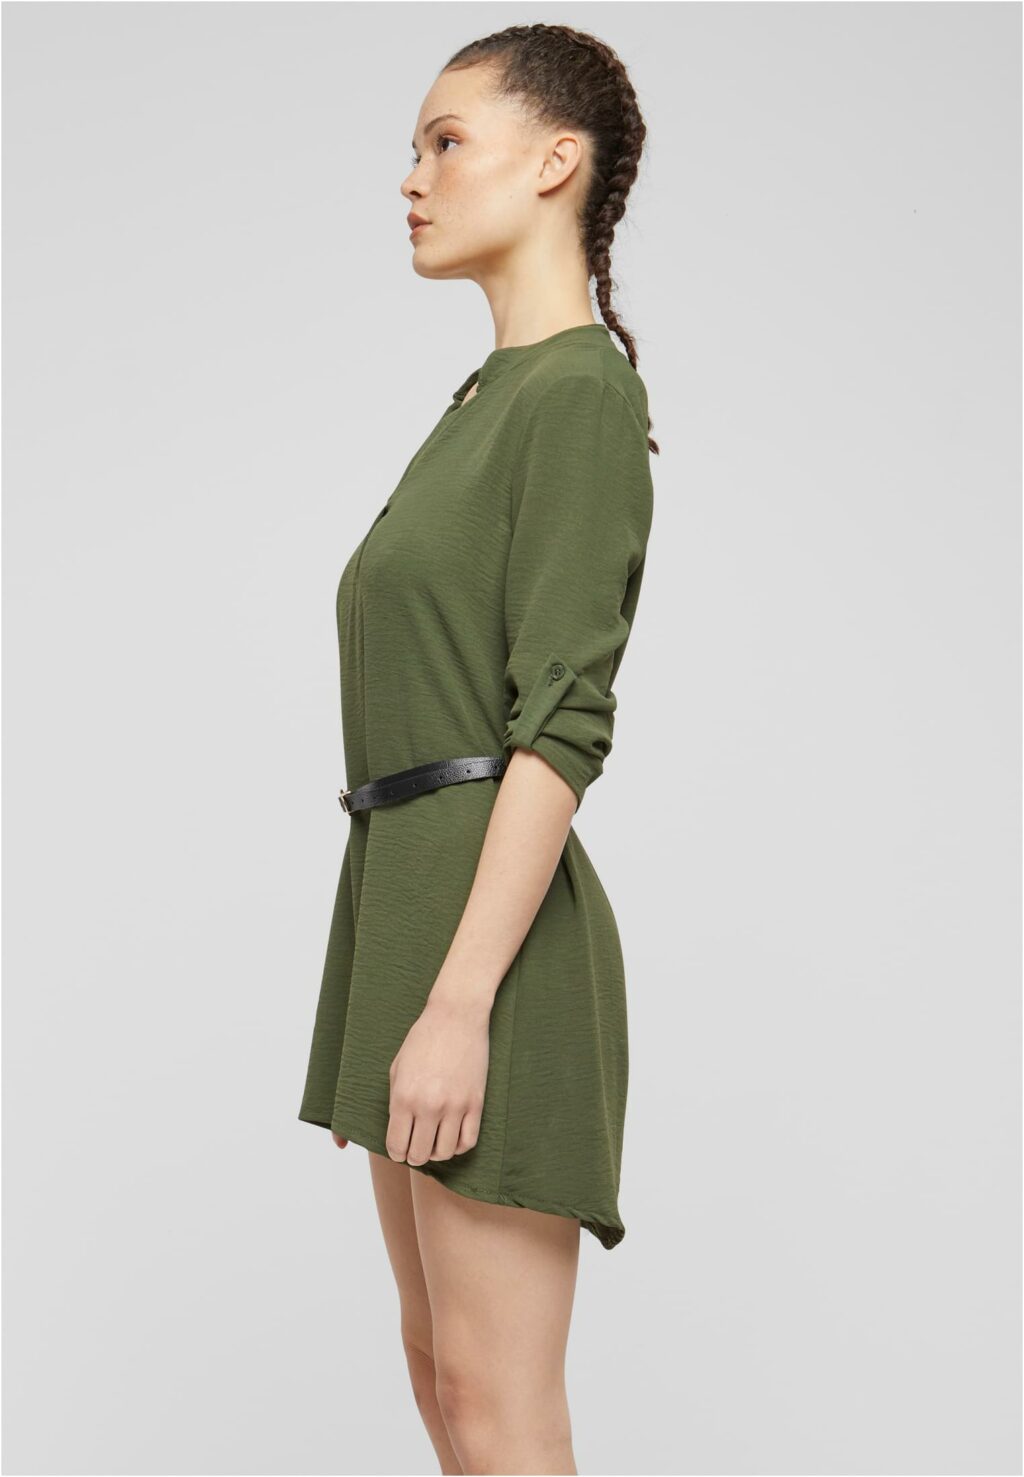 Cloud5ive Damen Longform Musselin Turn-Up Shirt mit Gürtel green 5126CL5